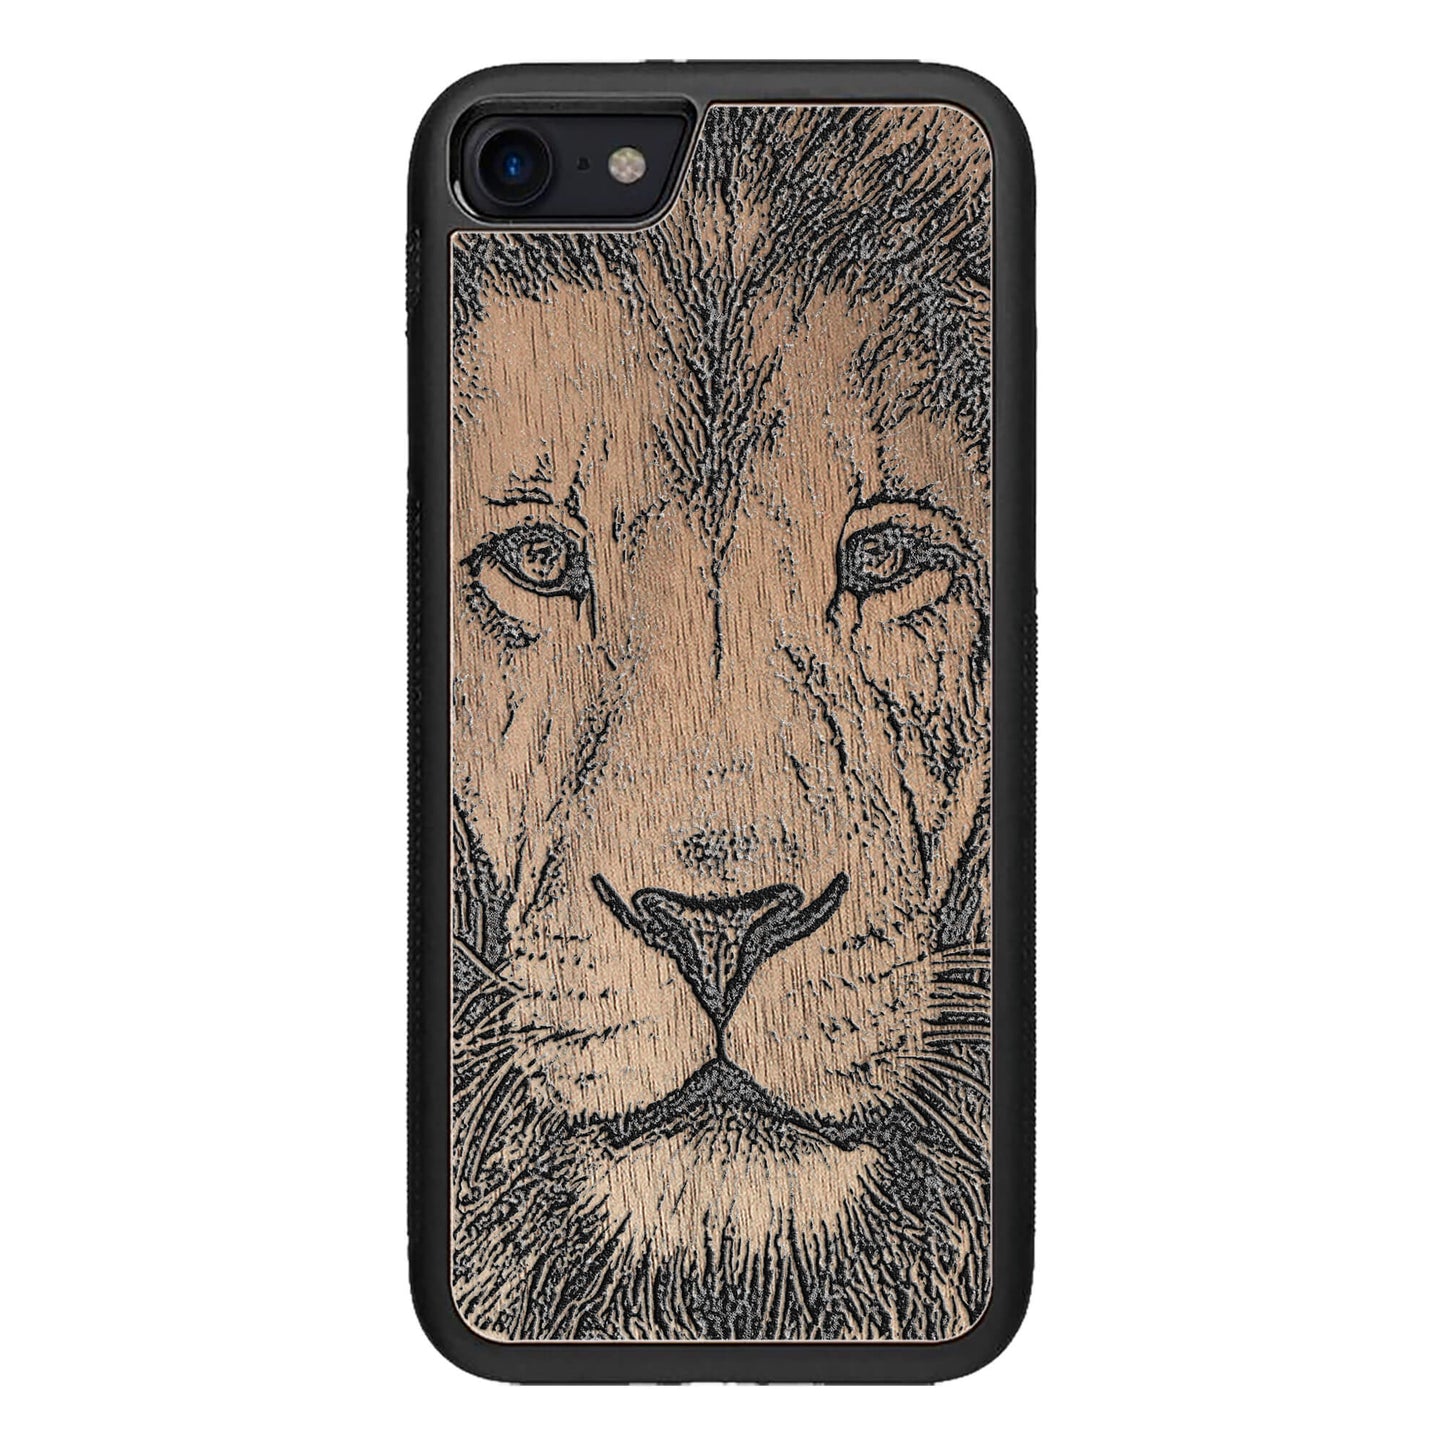 Wood Case for iPhone SE 3 generation case Lion